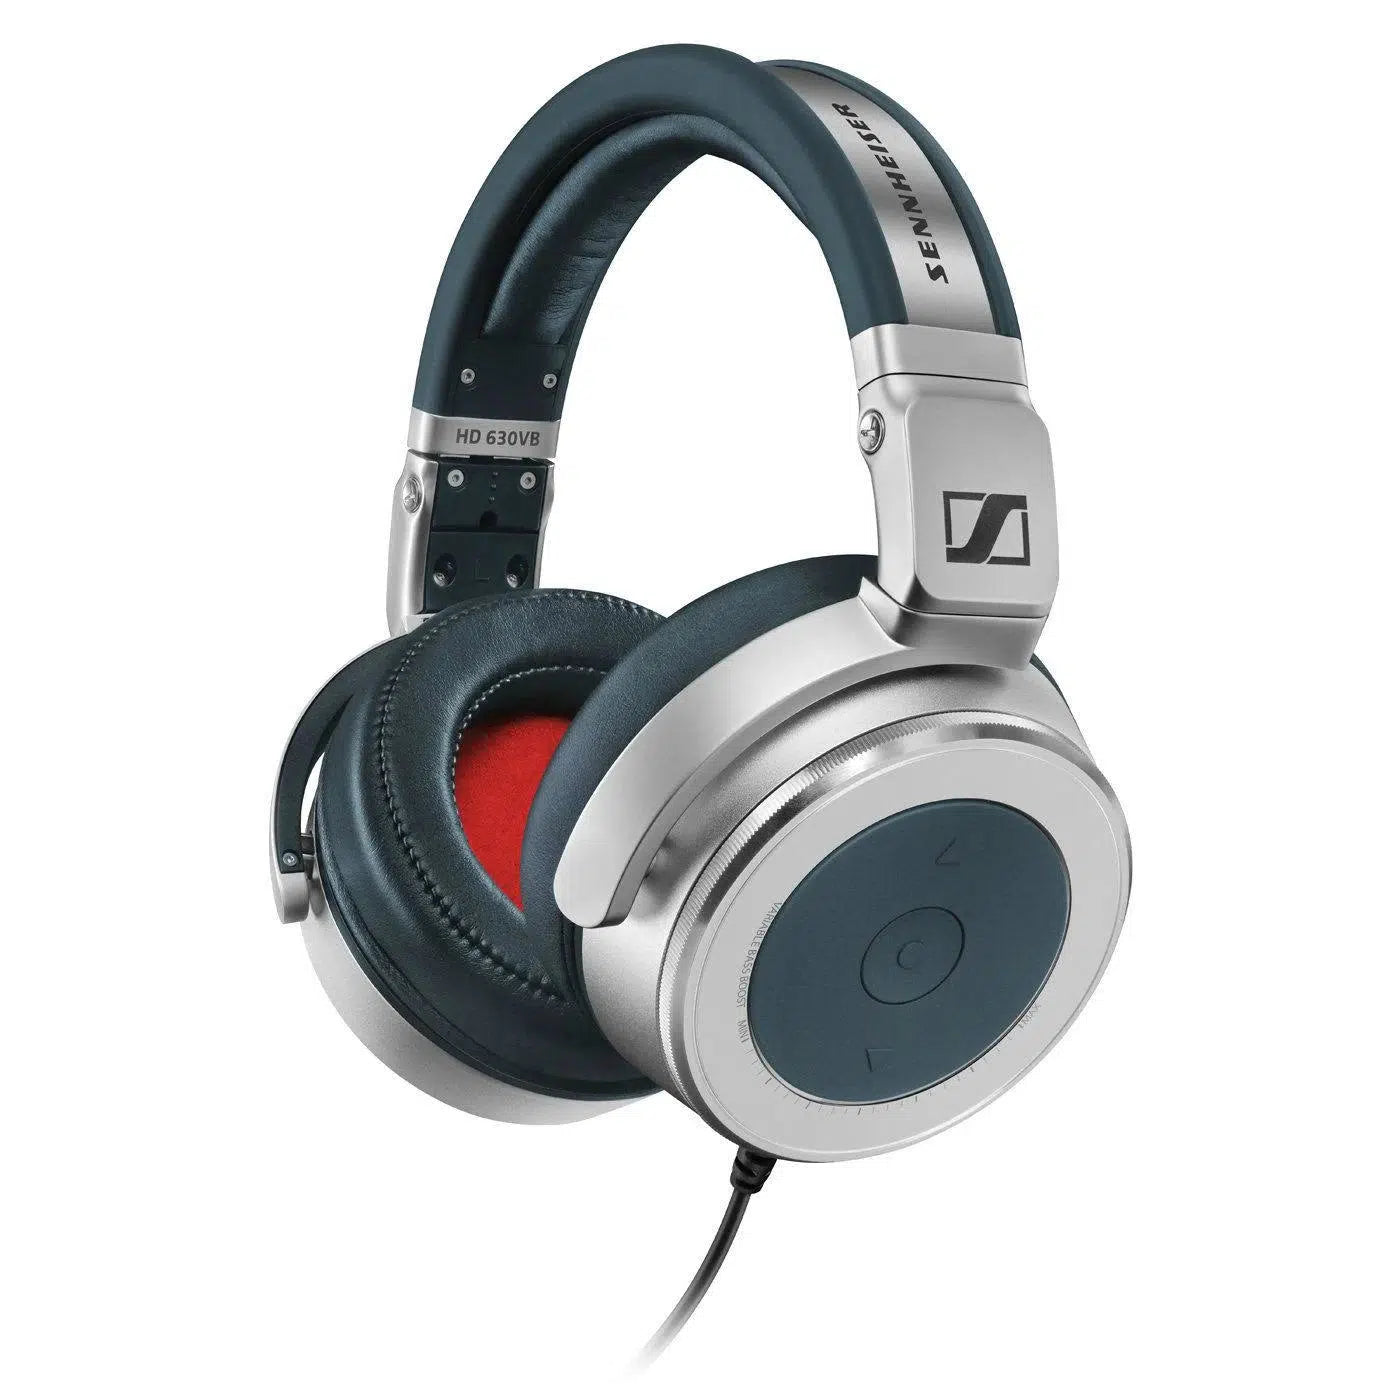 Sennheiser HD 630VB Headphones with Variable Bass and Call Control, Silver